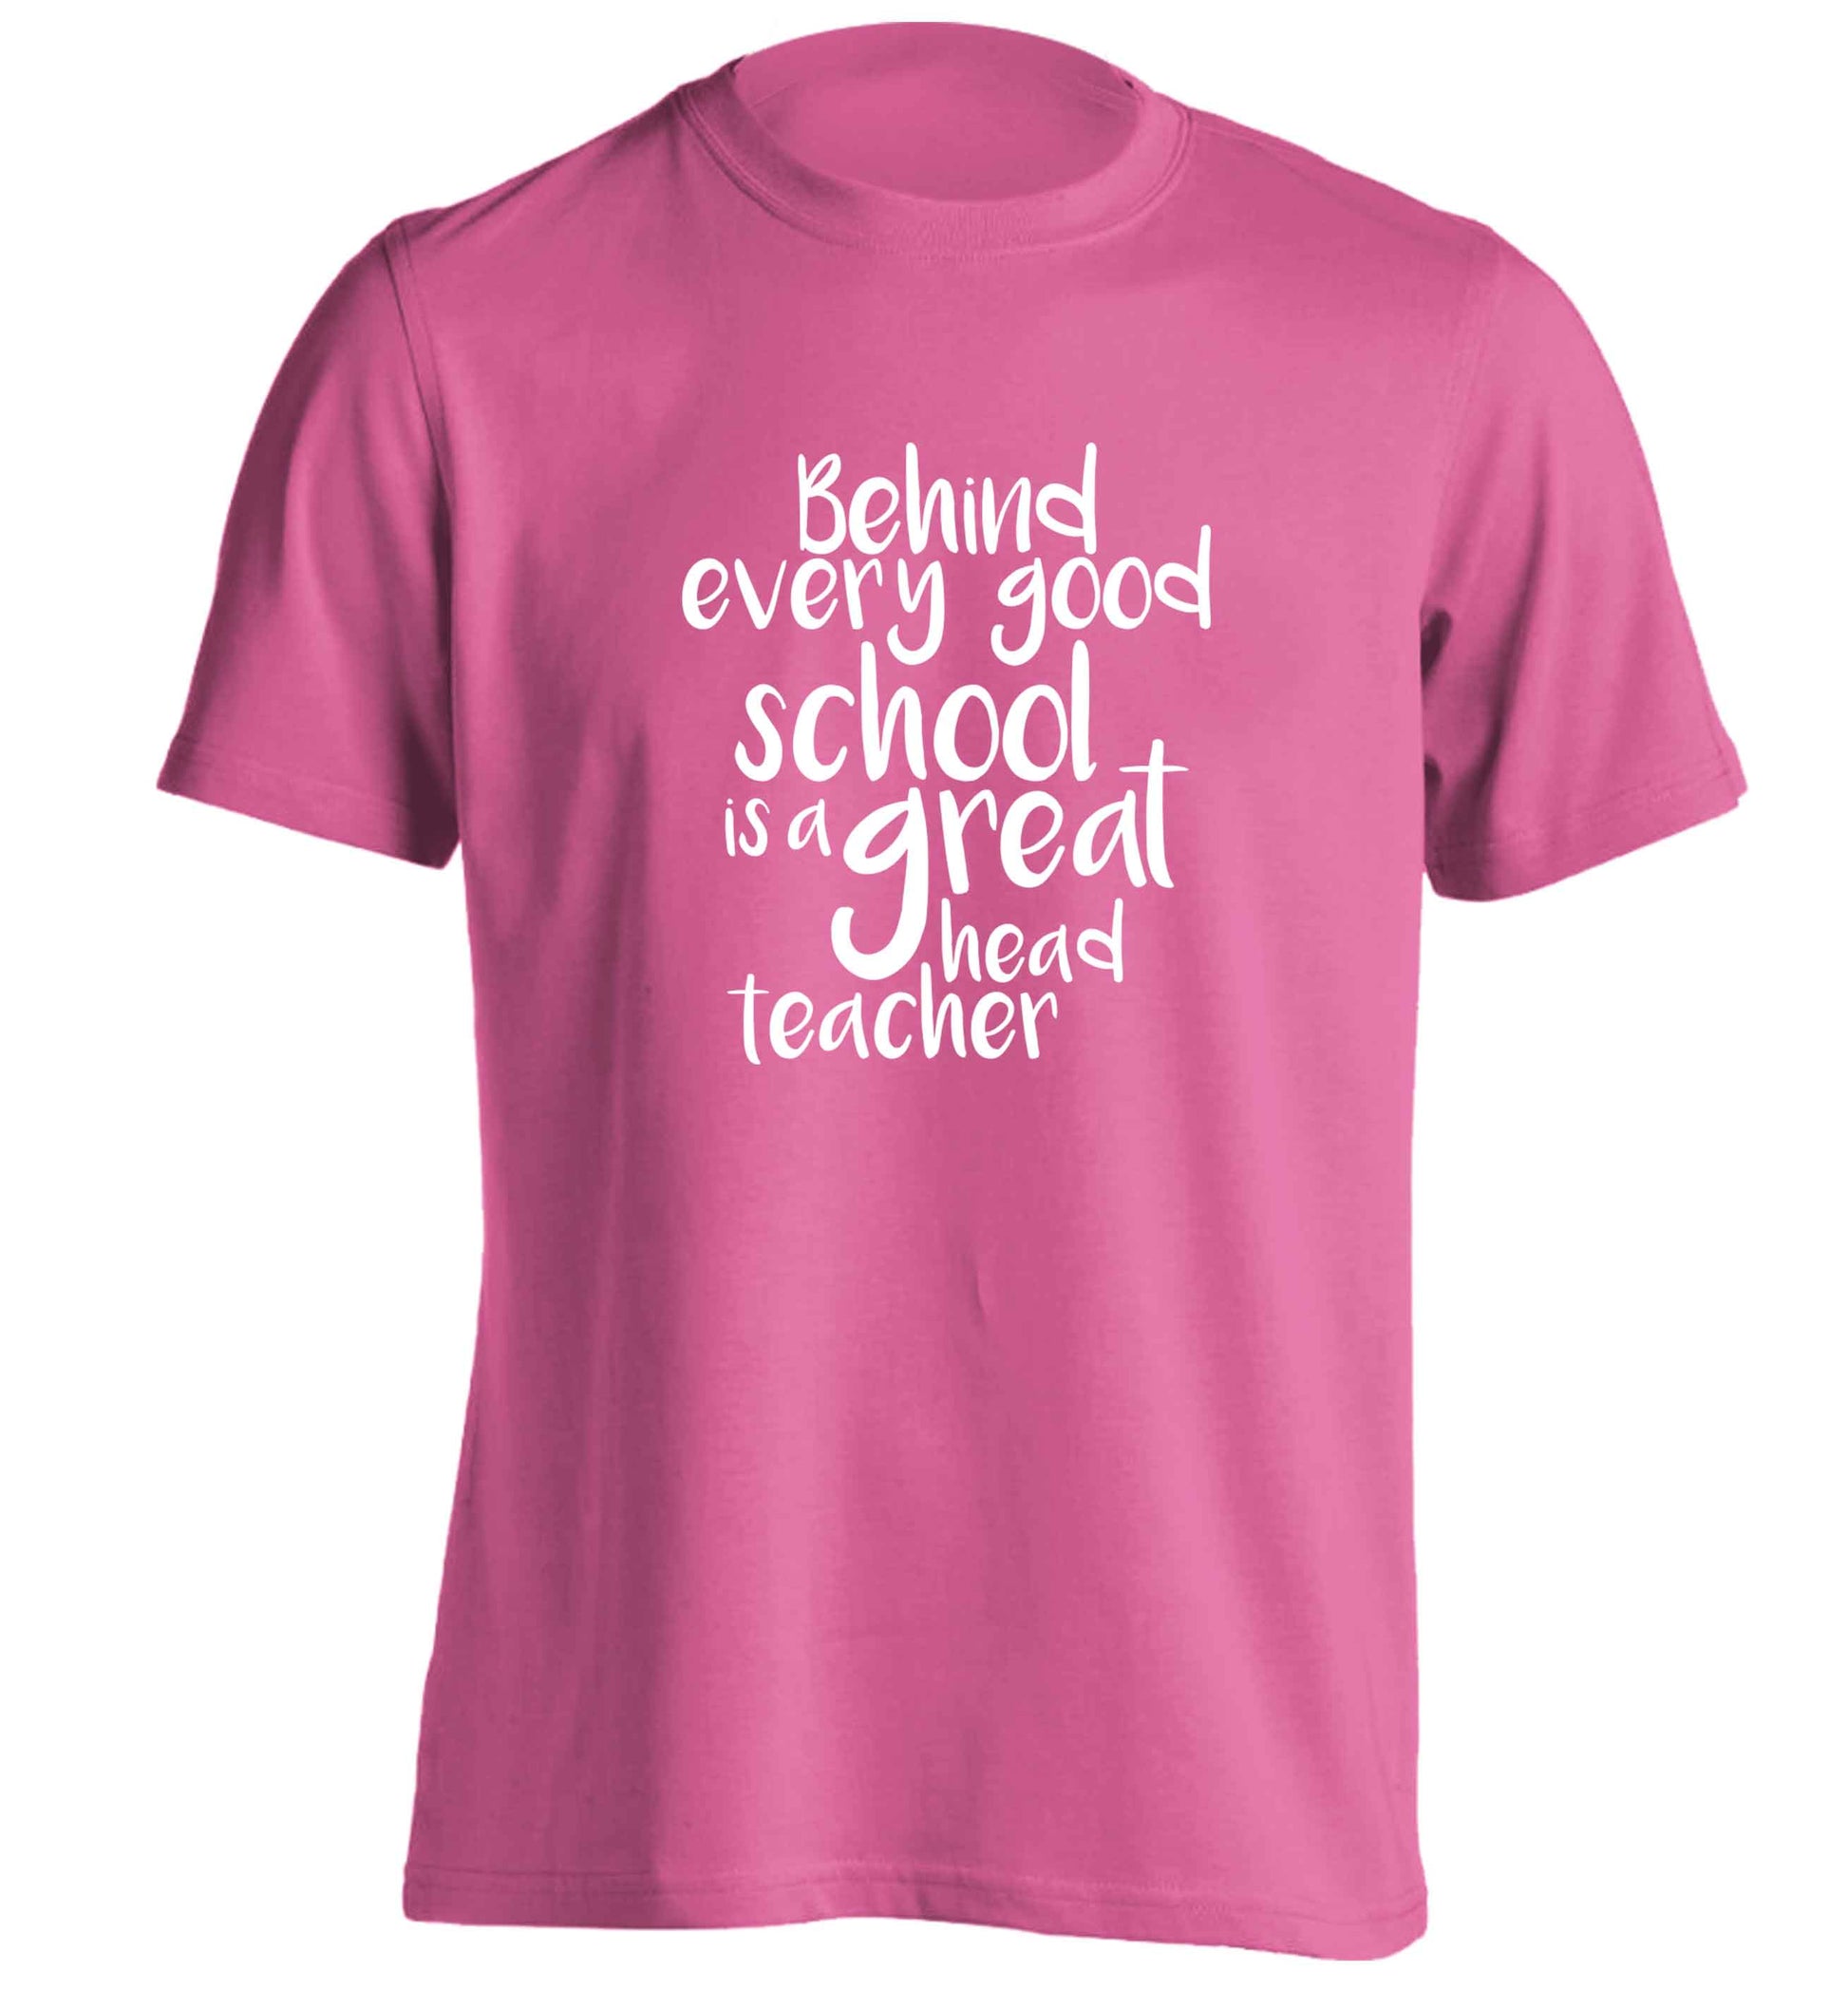 Behind every good school is a great head teacher adults unisex pink Tshirt 2XL